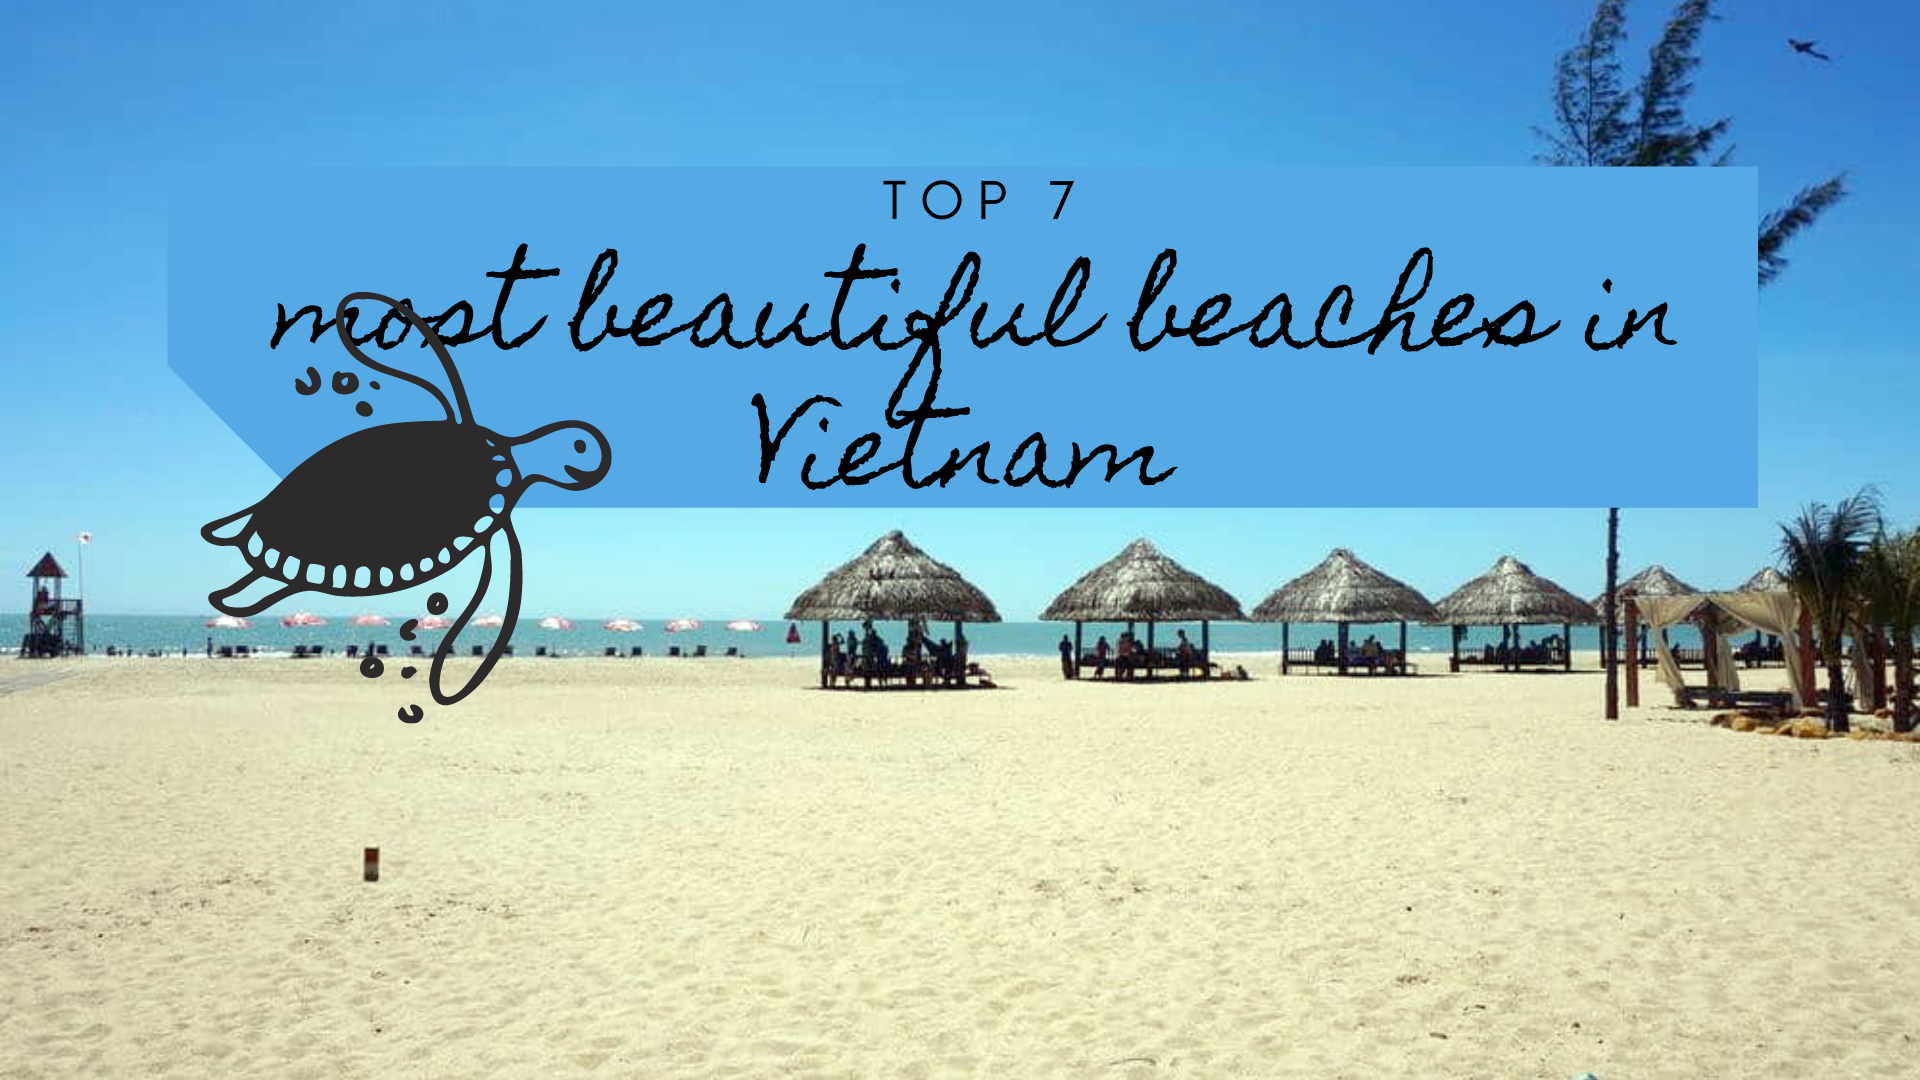 Top 7 most beautiful beaches in Vietnam